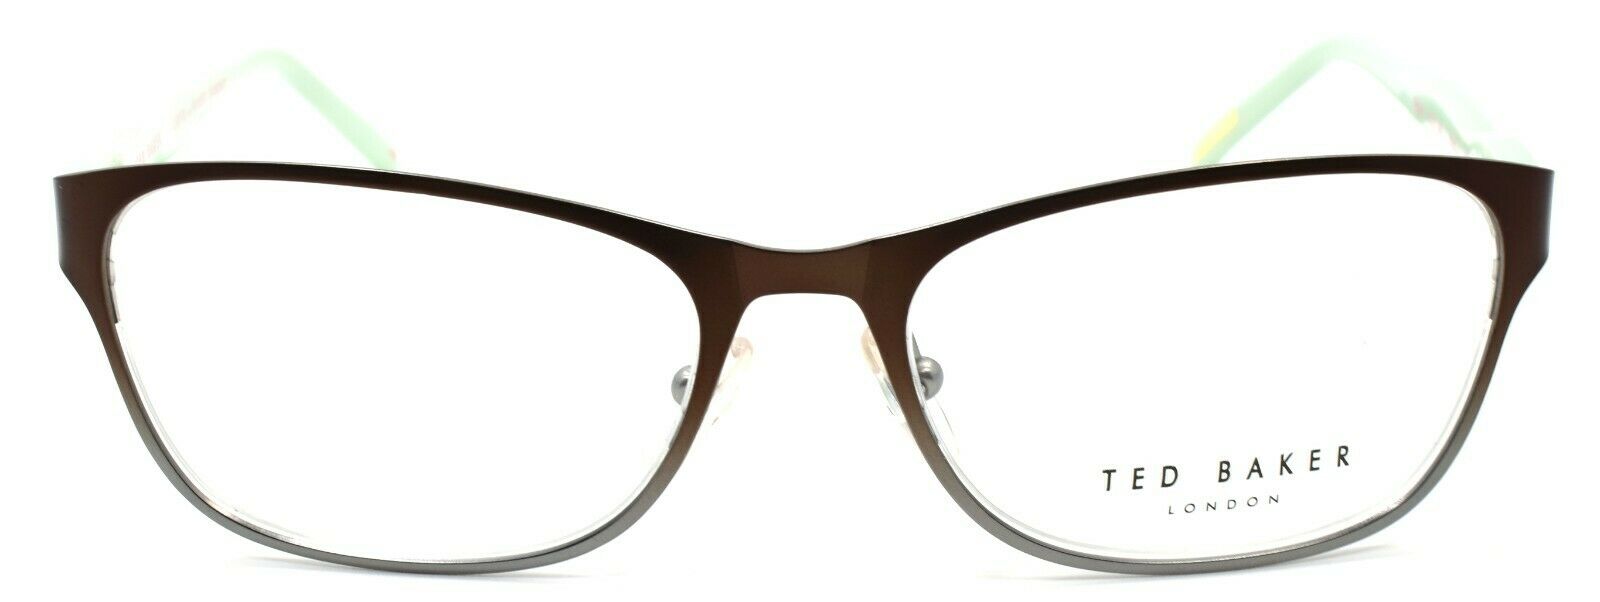 2-Ted Baker Rigger 2213 194 Women's Eyeglasses Frames 51-17-135 Brown / Mint-4894327075836-IKSpecs